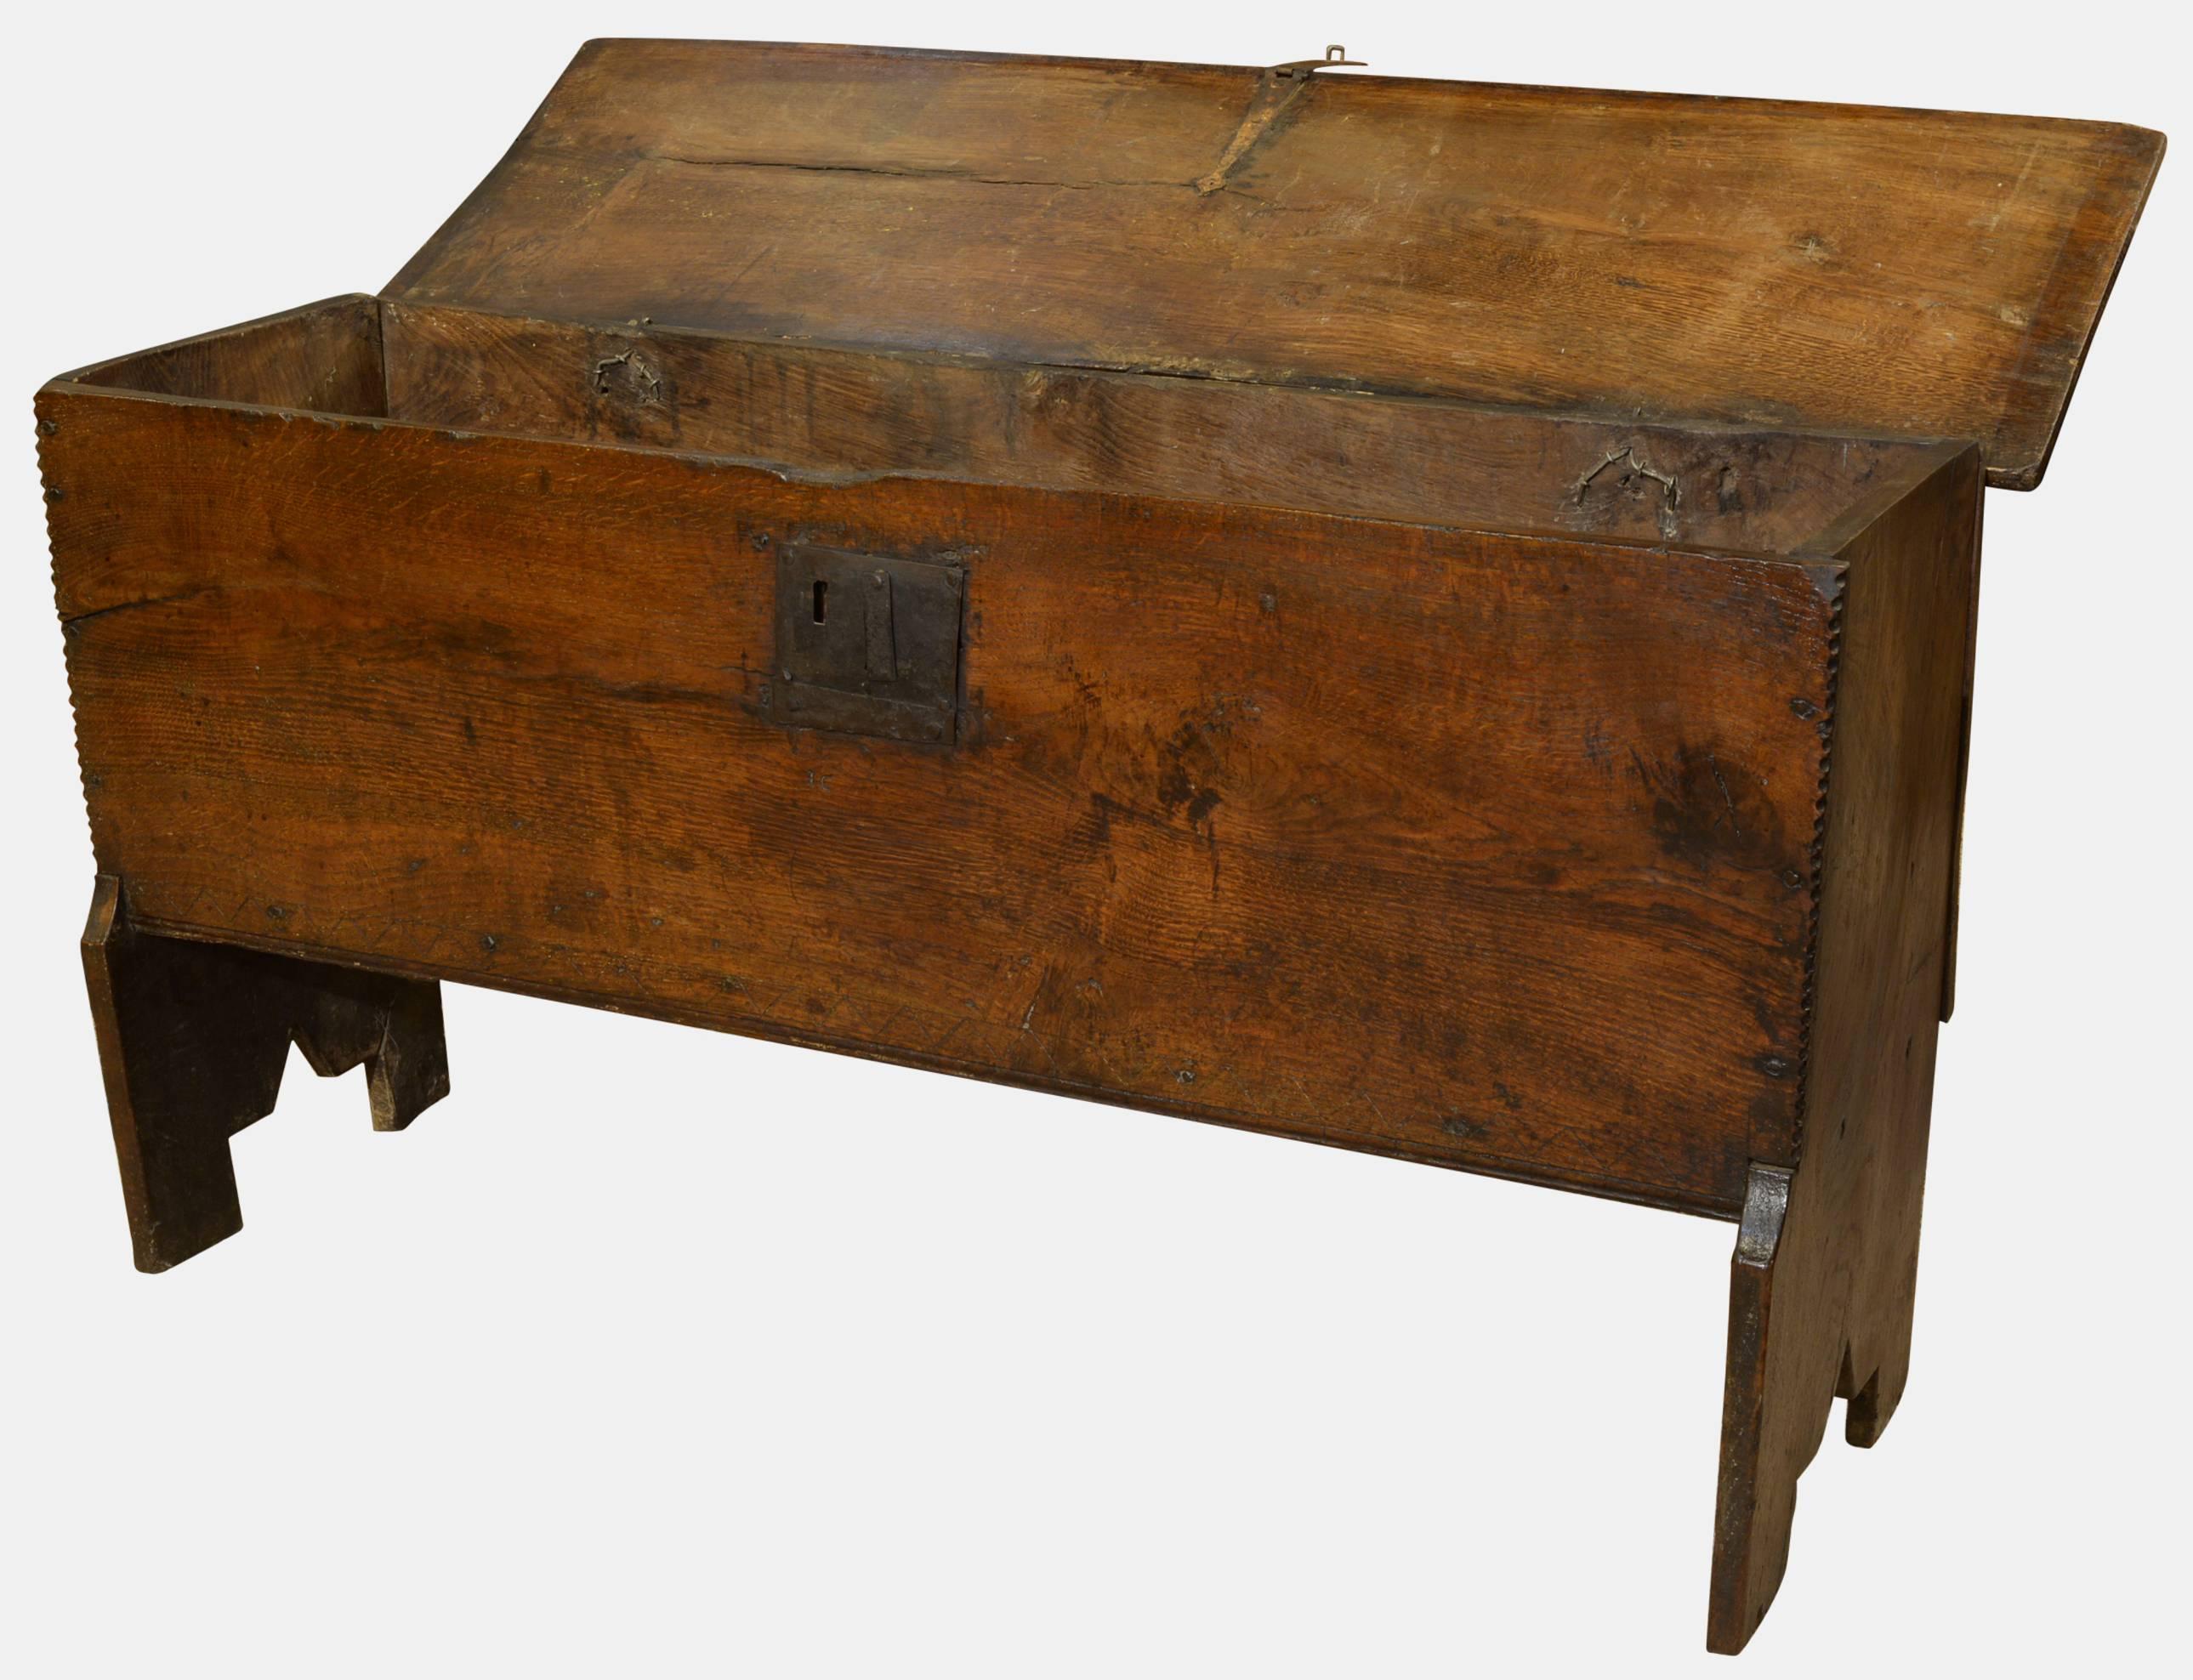 A good 17th century oak six plank coffer.

Measures: 62cm (24.4